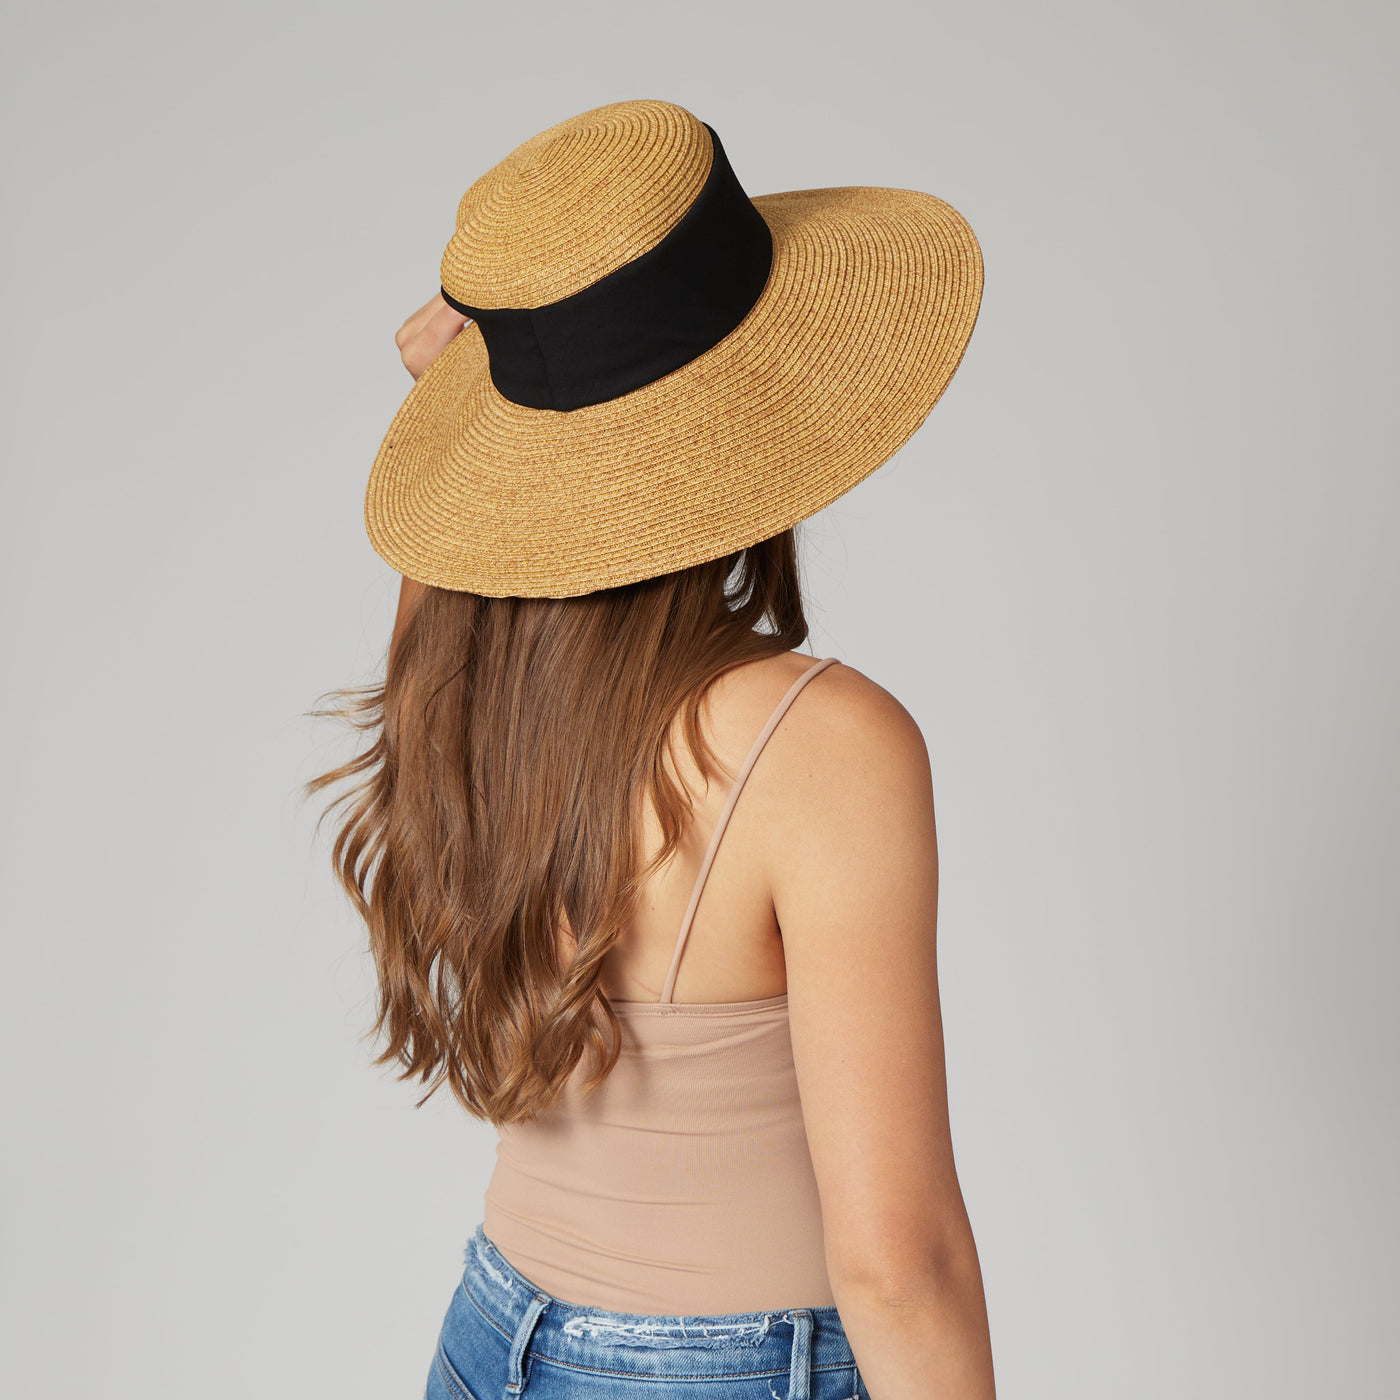 SUN BRIM - Women's Collapsible Crown Sun Hat